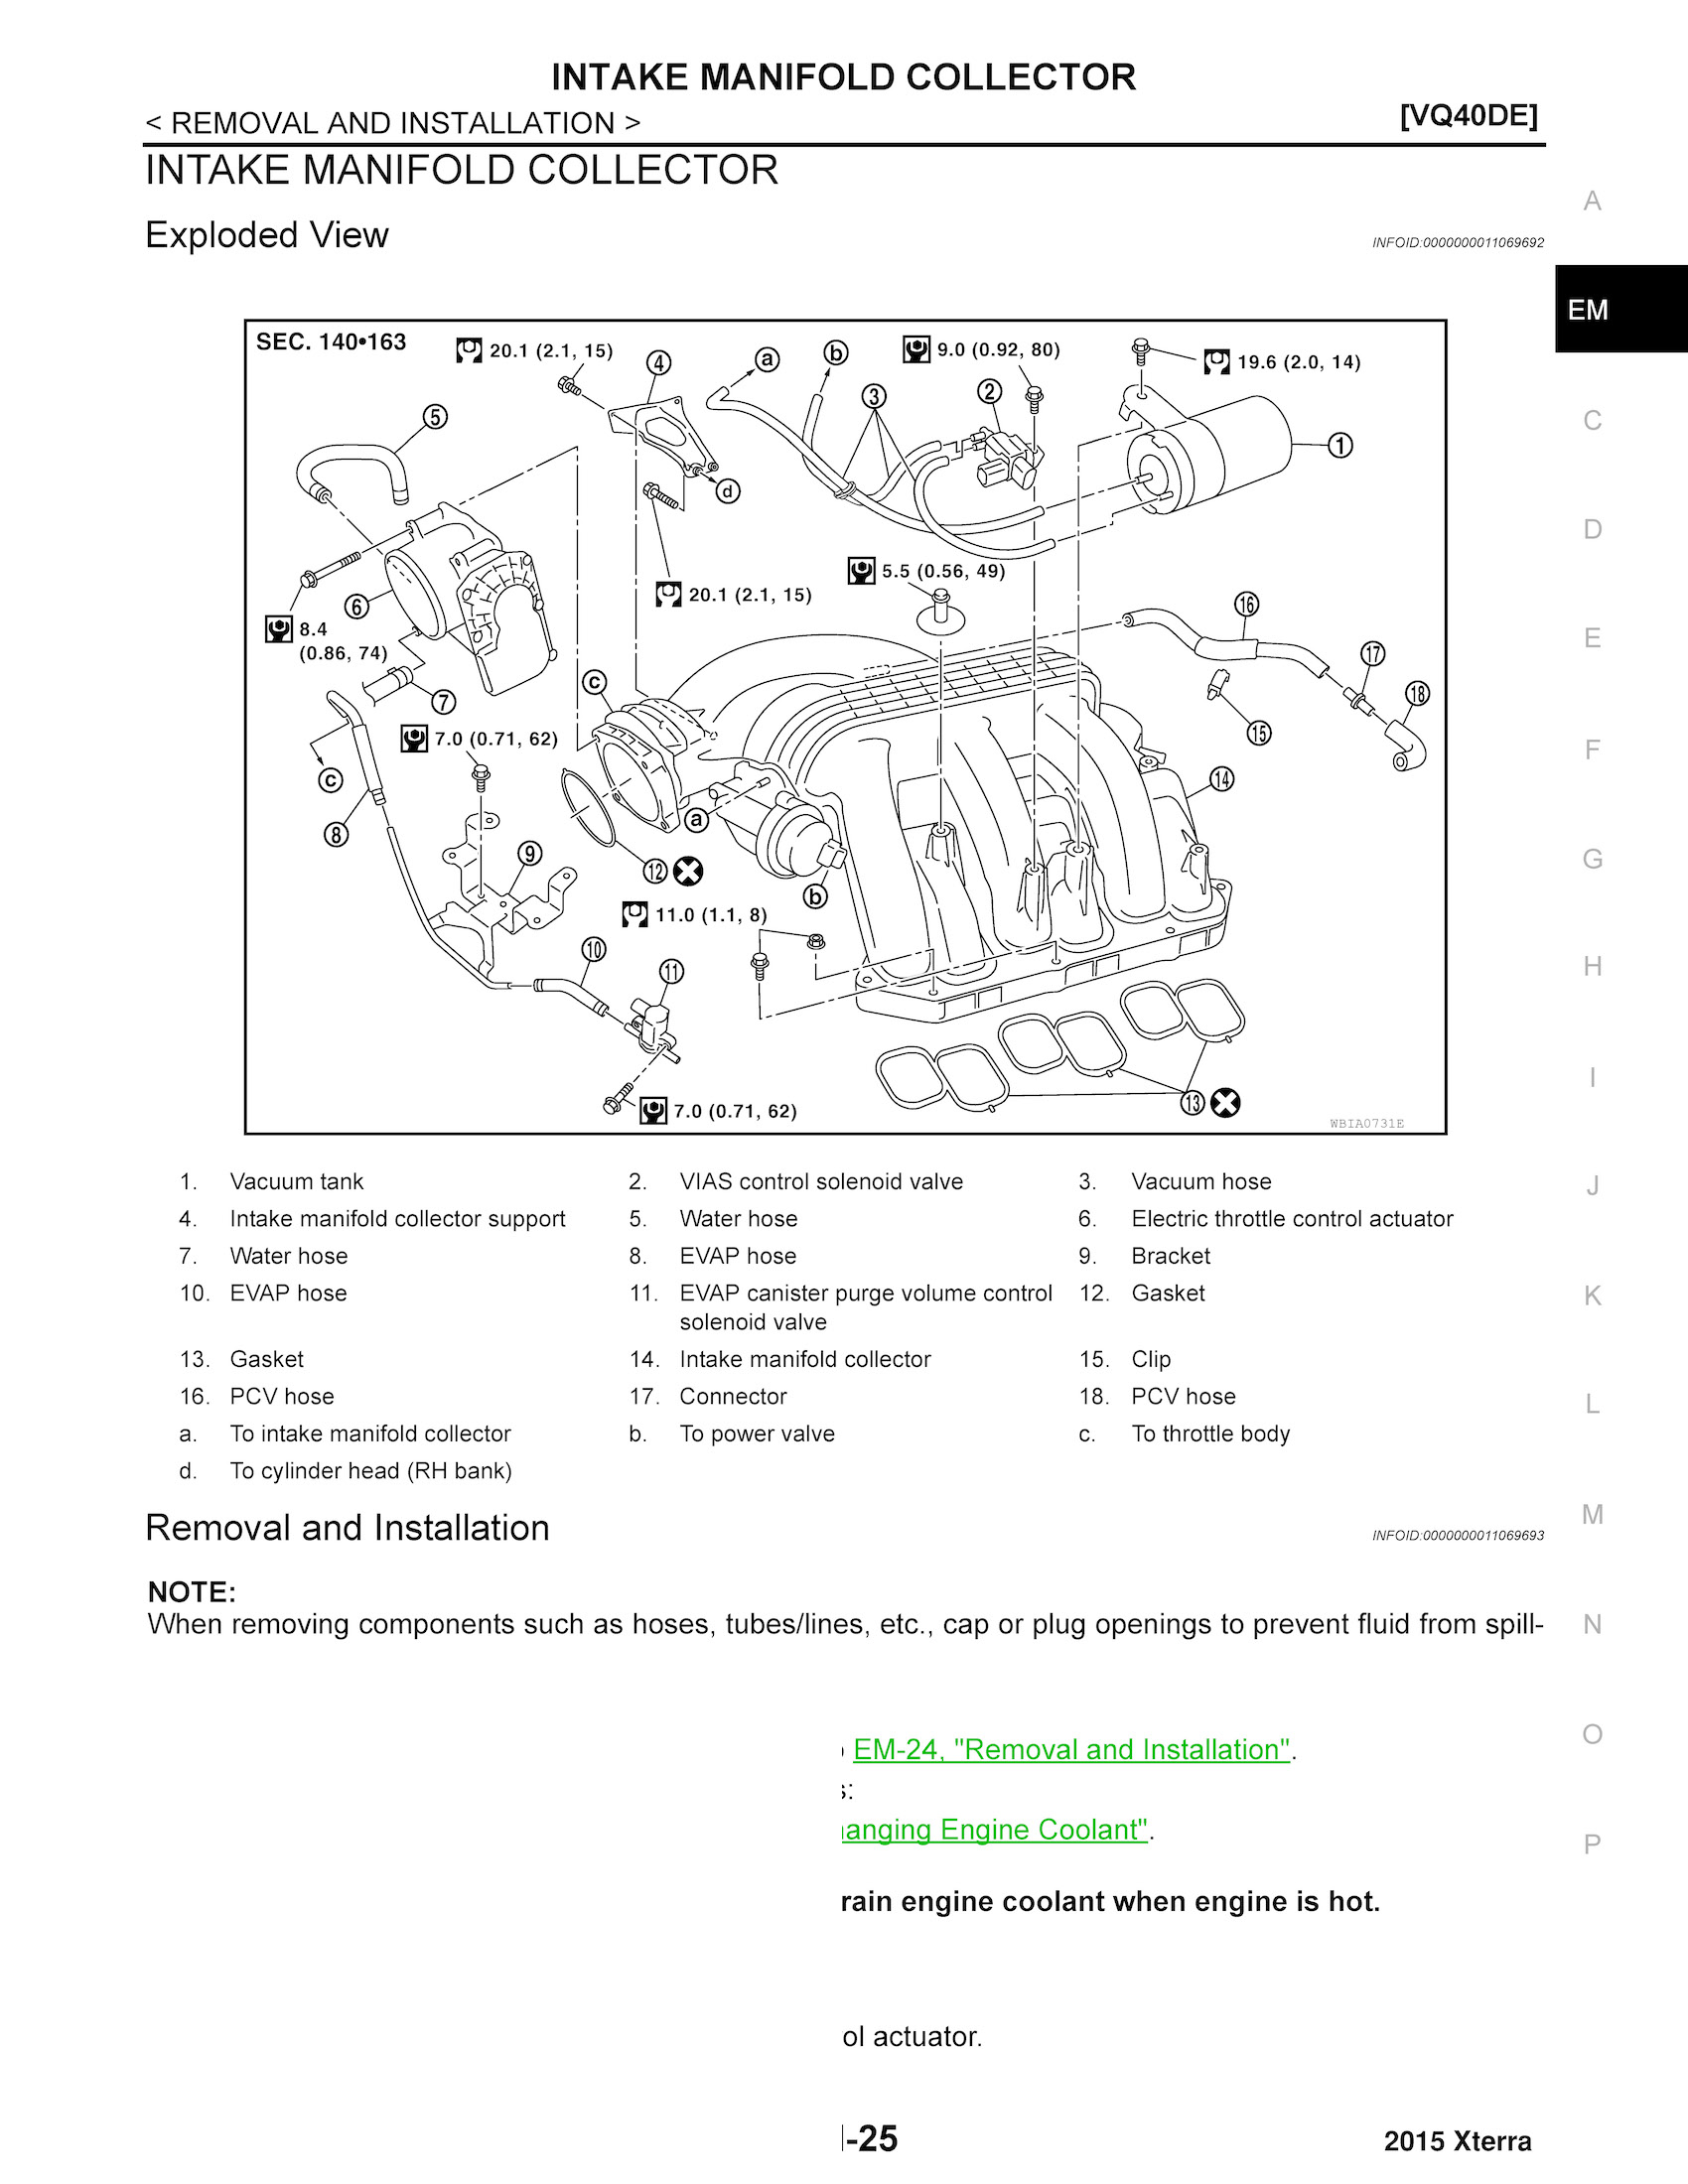 2015 Nissan XTerra Service Repair Manual.